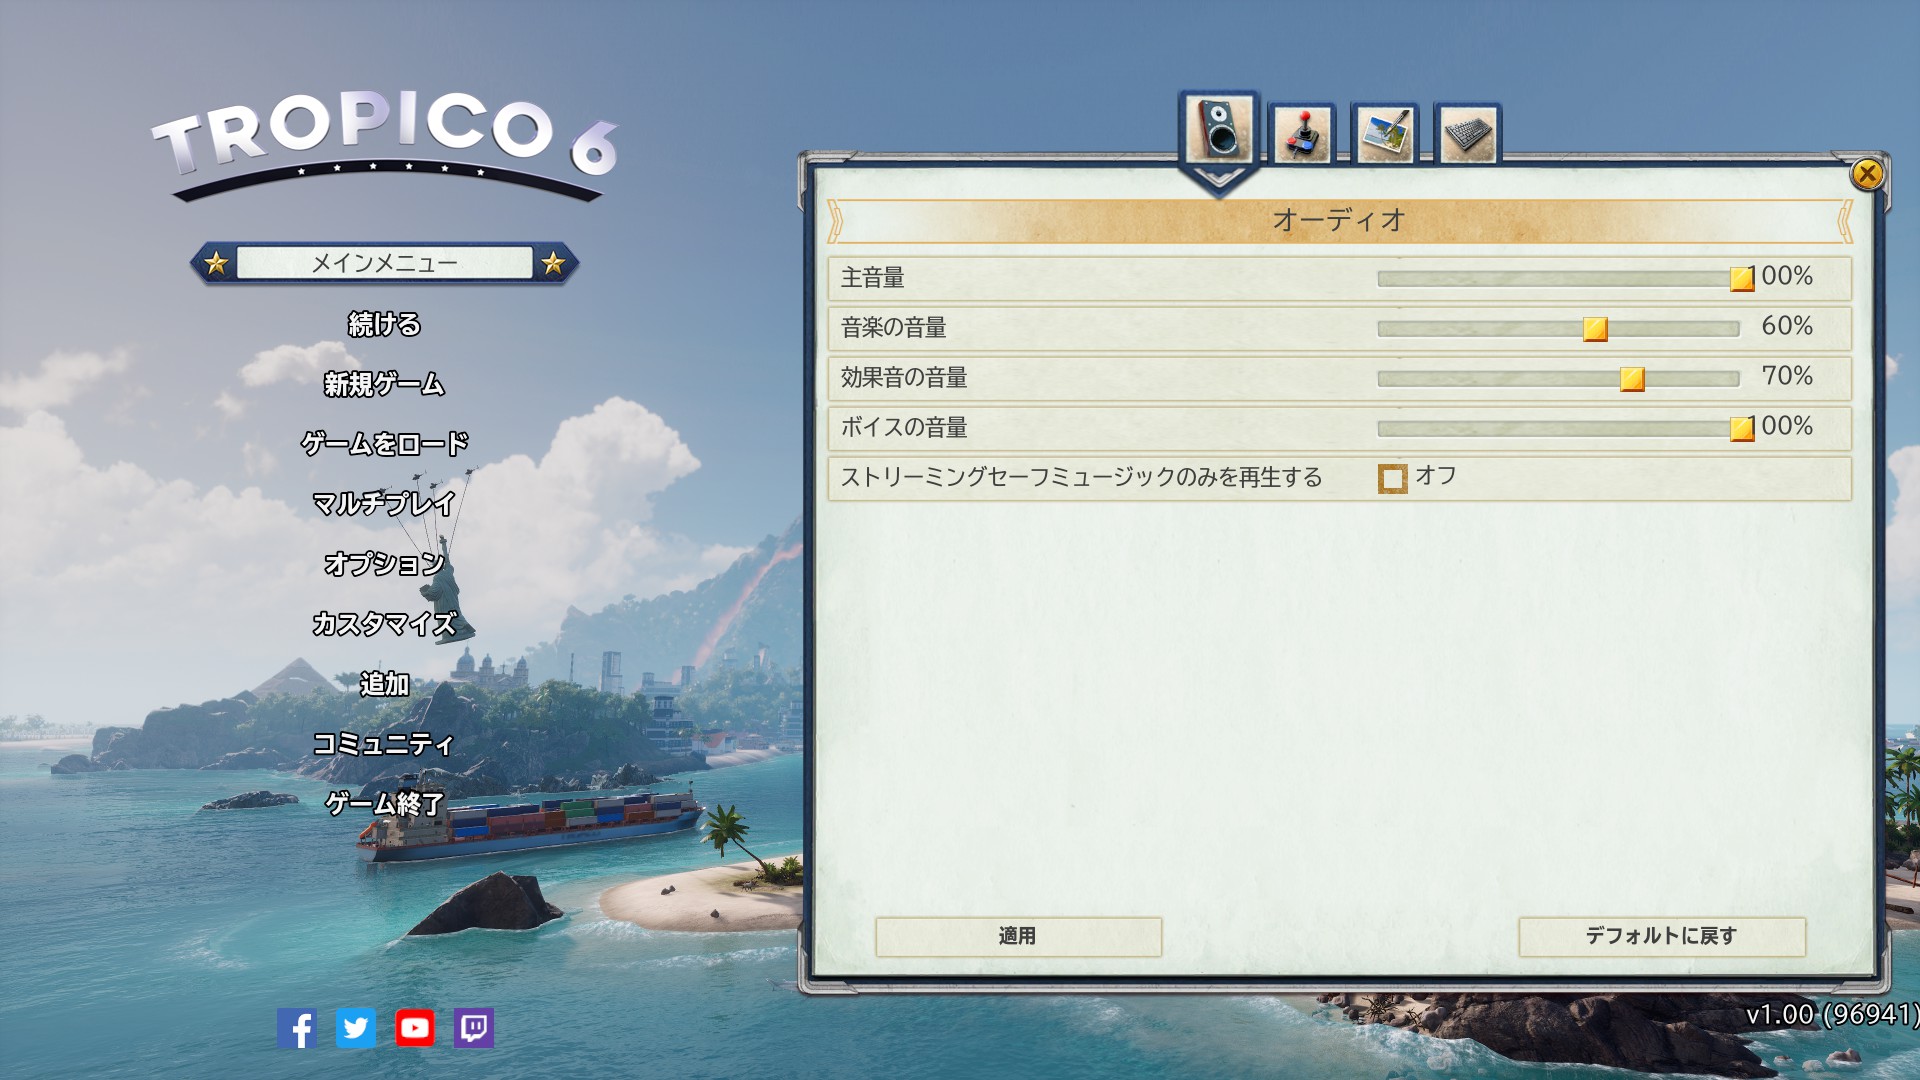 Steam Community :: Guide :: 日本語 Official Japanese translation